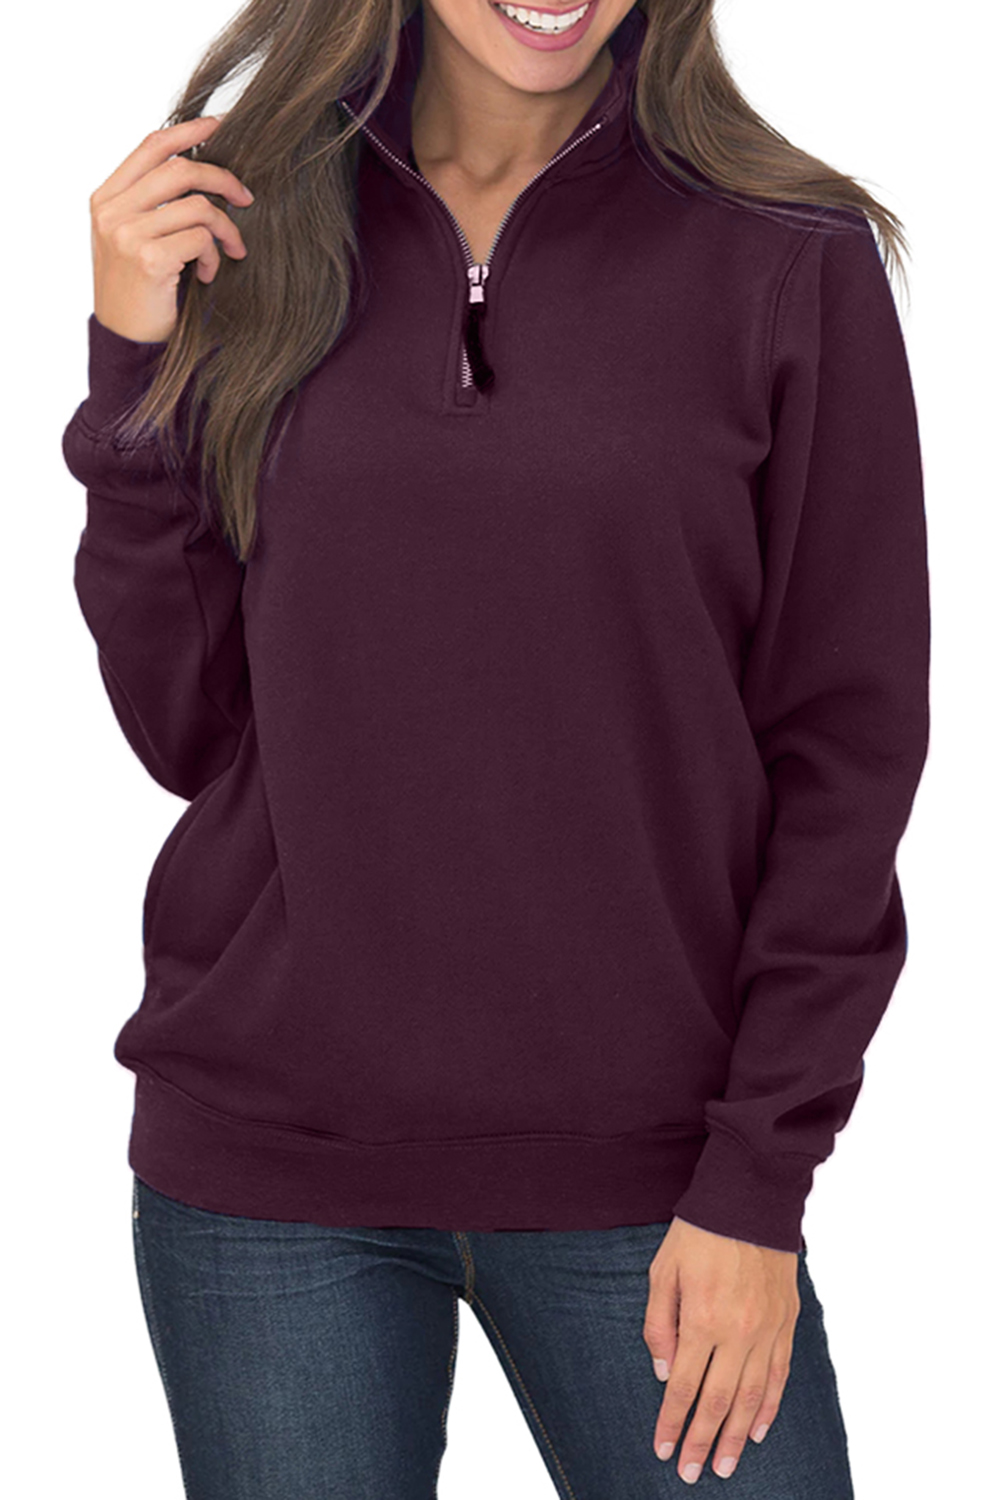 Burdy Pocket Style Quarter Zip Sweatshirt - (US 4-6)S